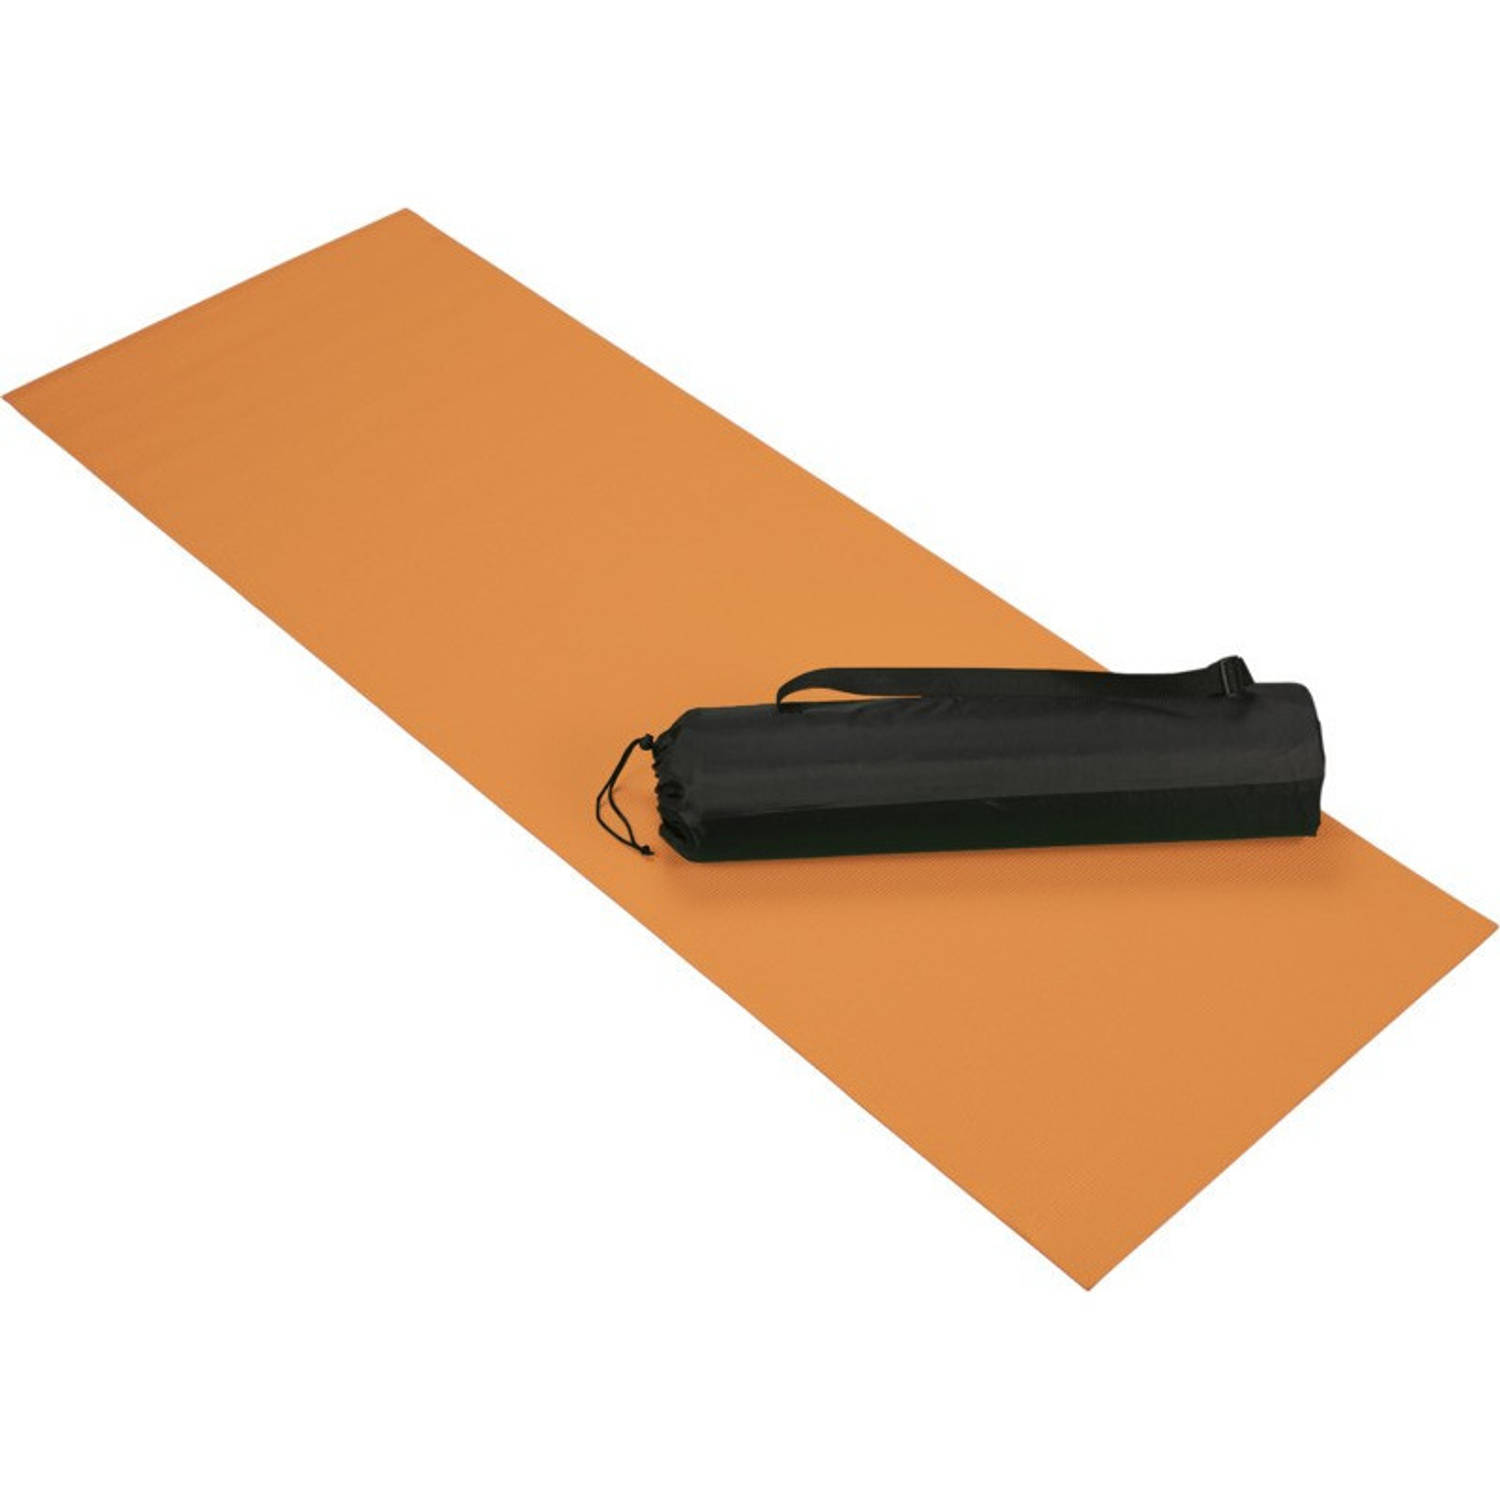 Oranje yoga-fitness mat 60 x 170 cm Sportmat-yogamat-pilatesmat Thuis fitness-yoga-pilates sport ben